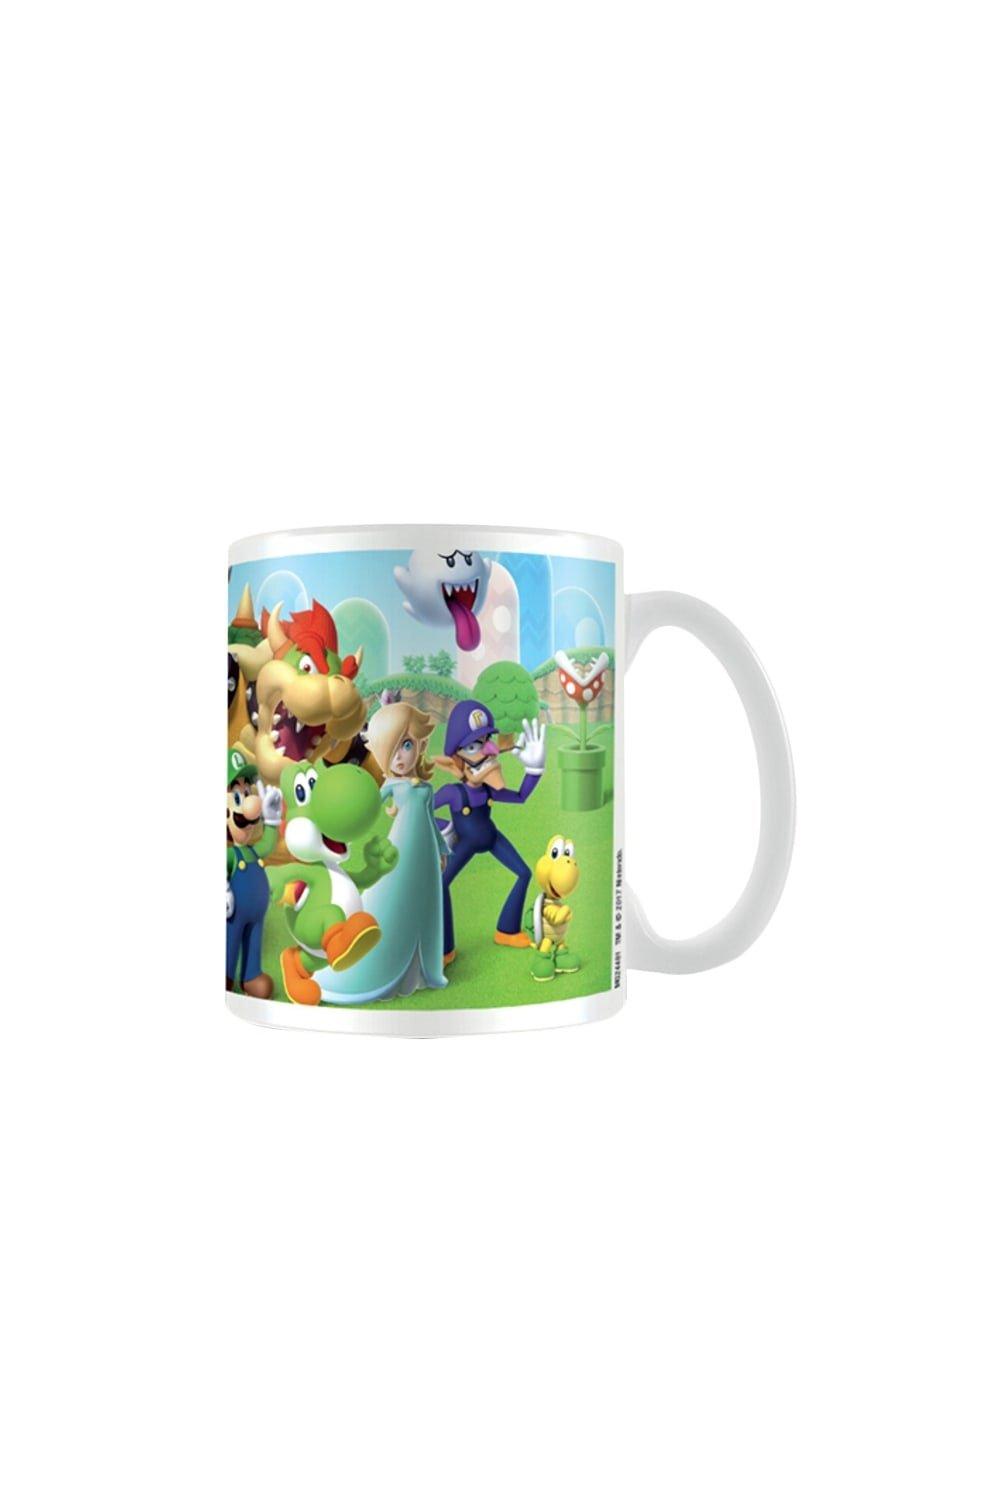 Photos - Mug / Cup Mushroom Kingdom Mug